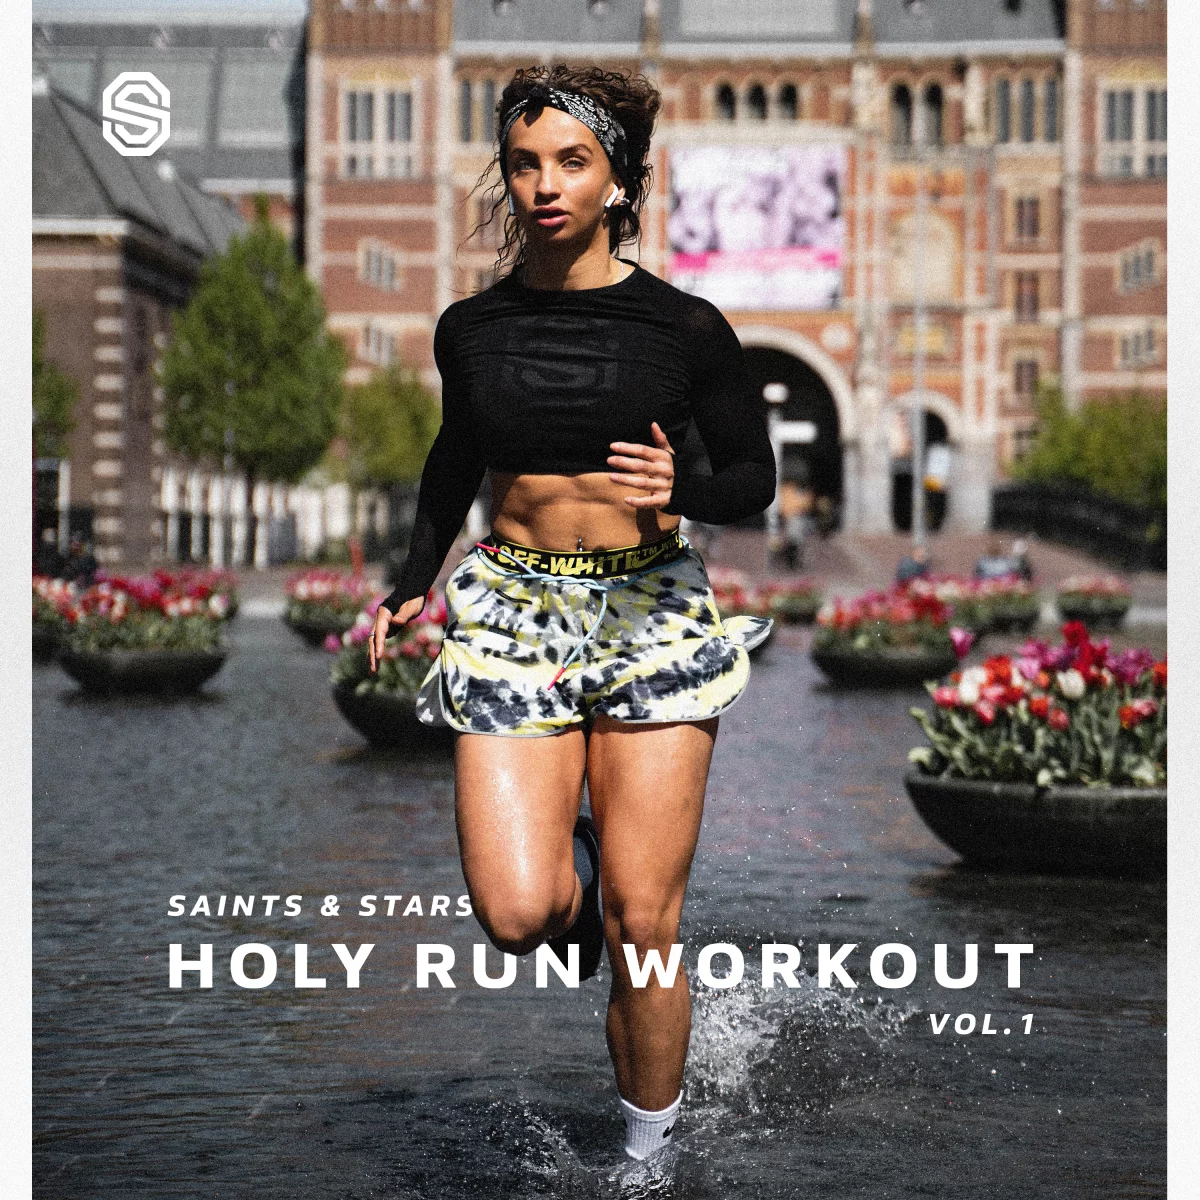 Holy Run Workout Vol. 1 - Saints & Stars⁠